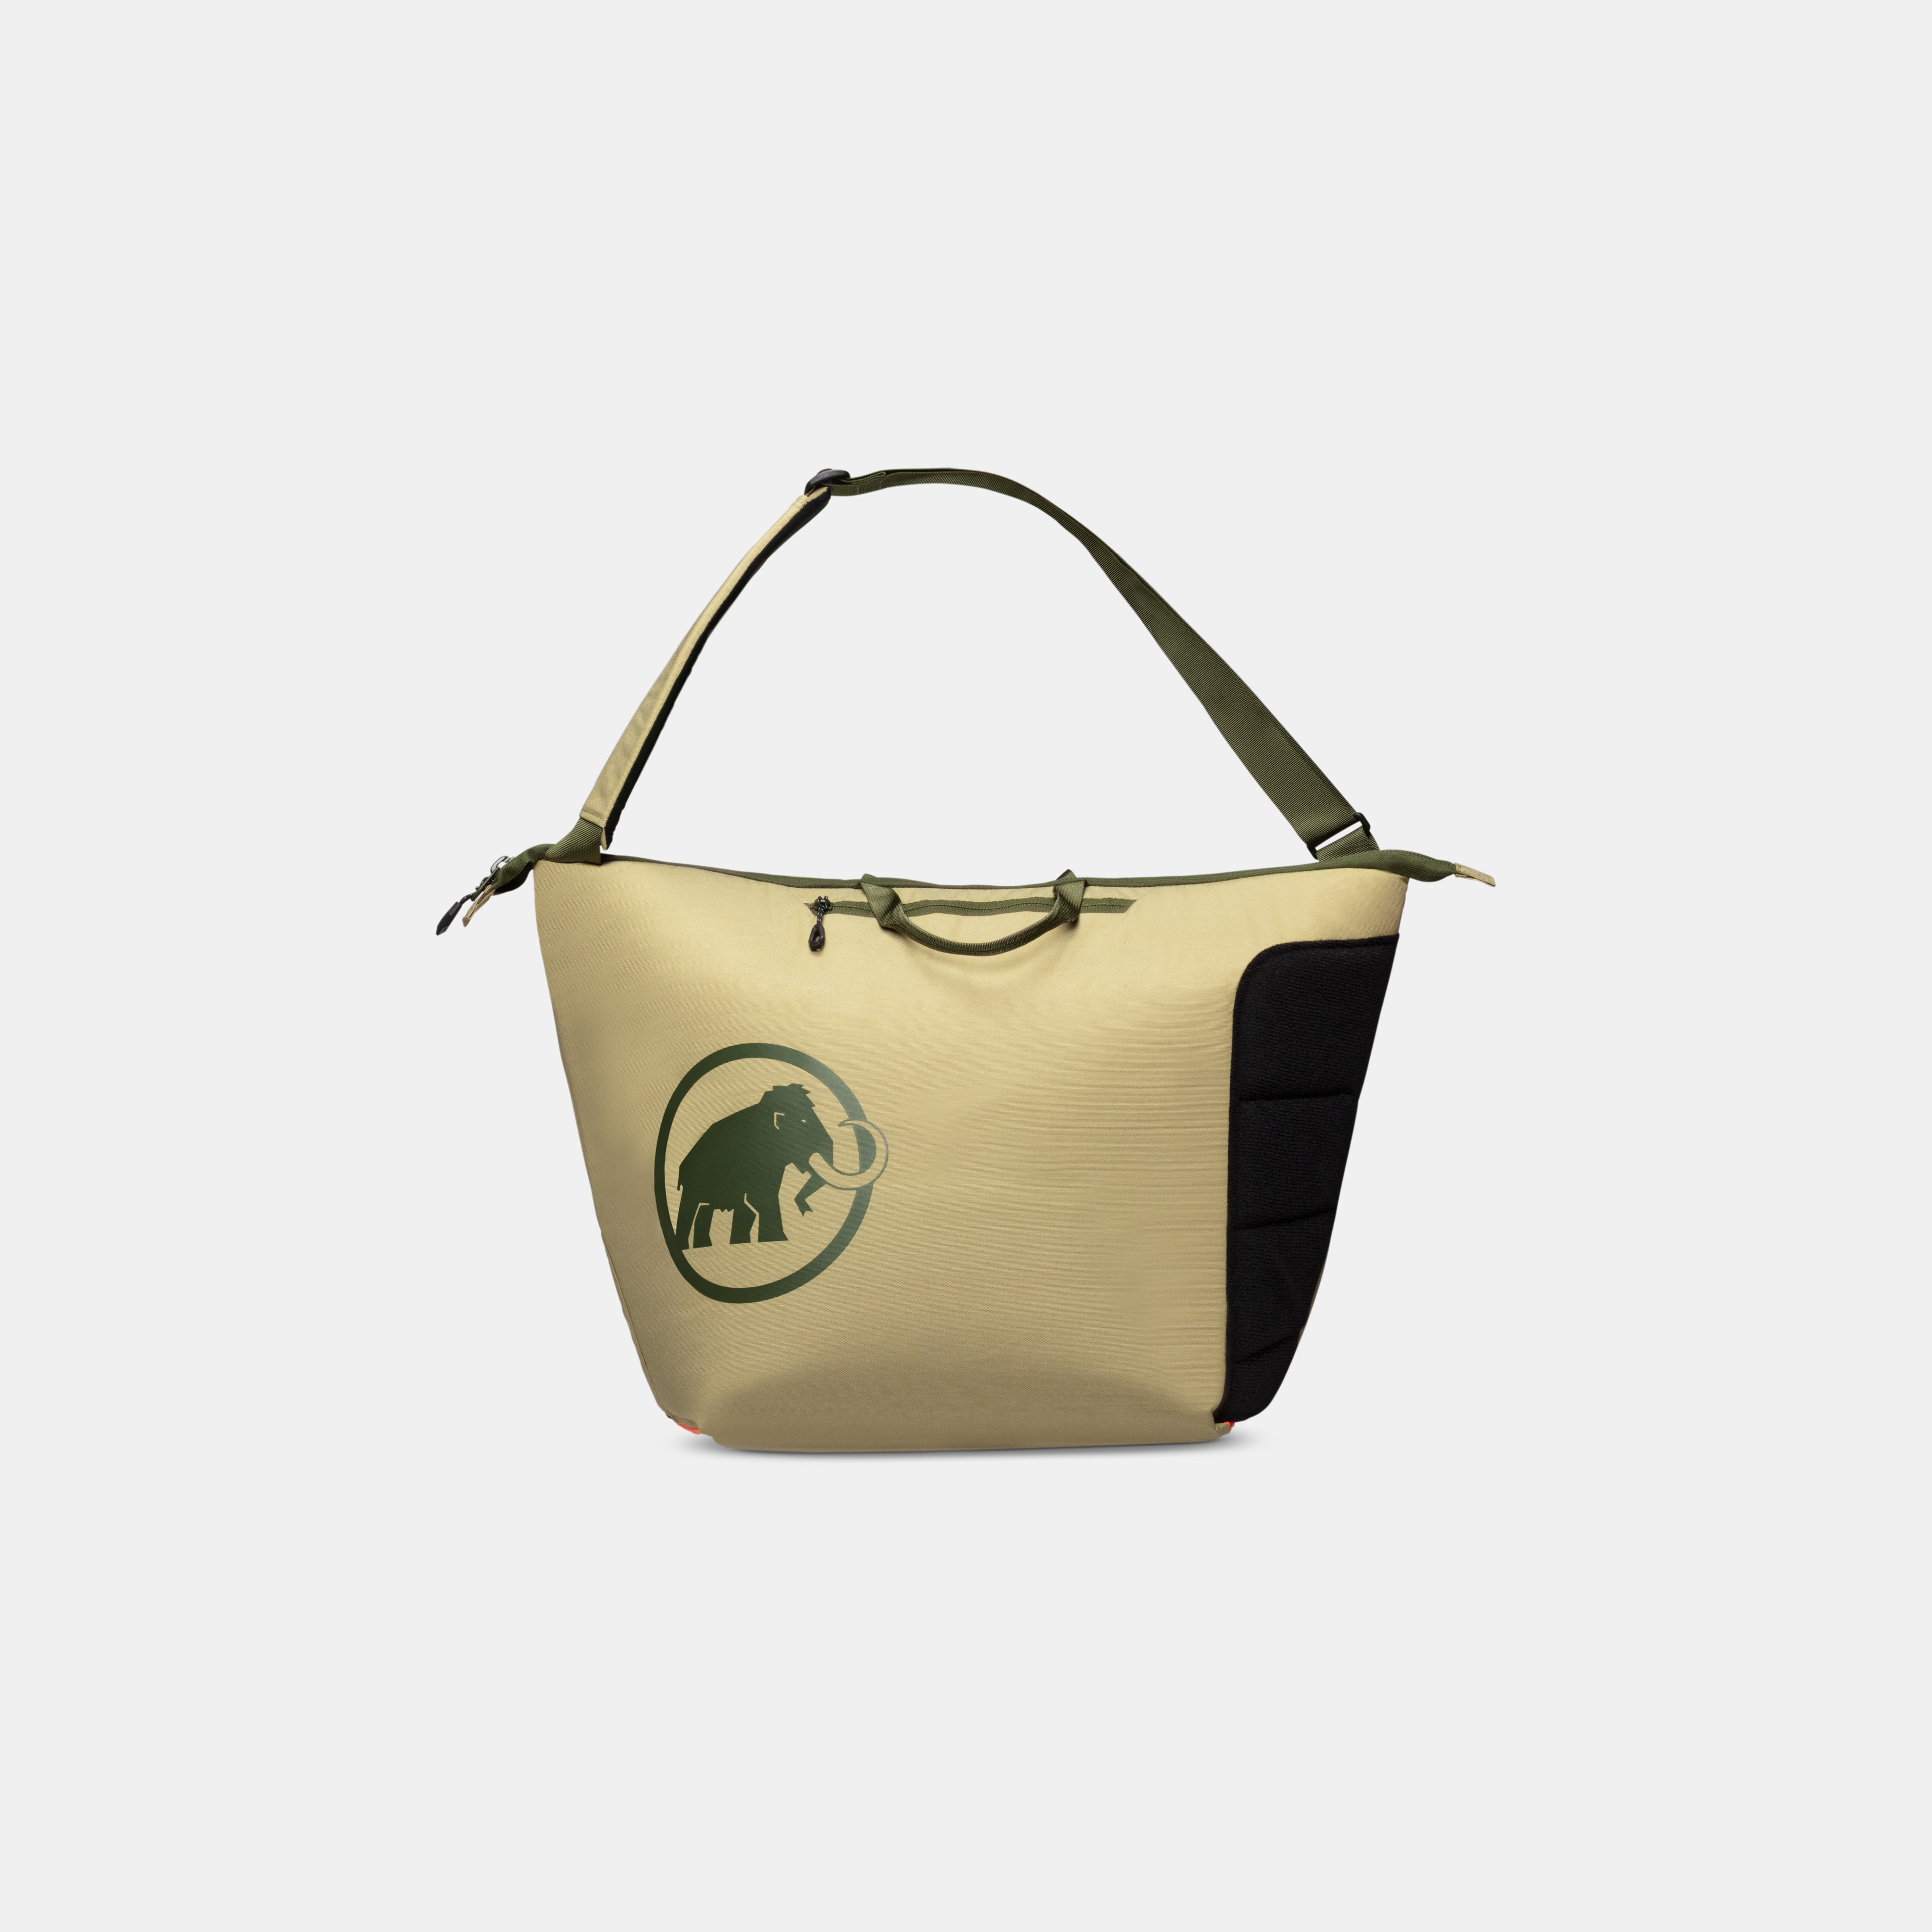 Magic Boulder Bag product image